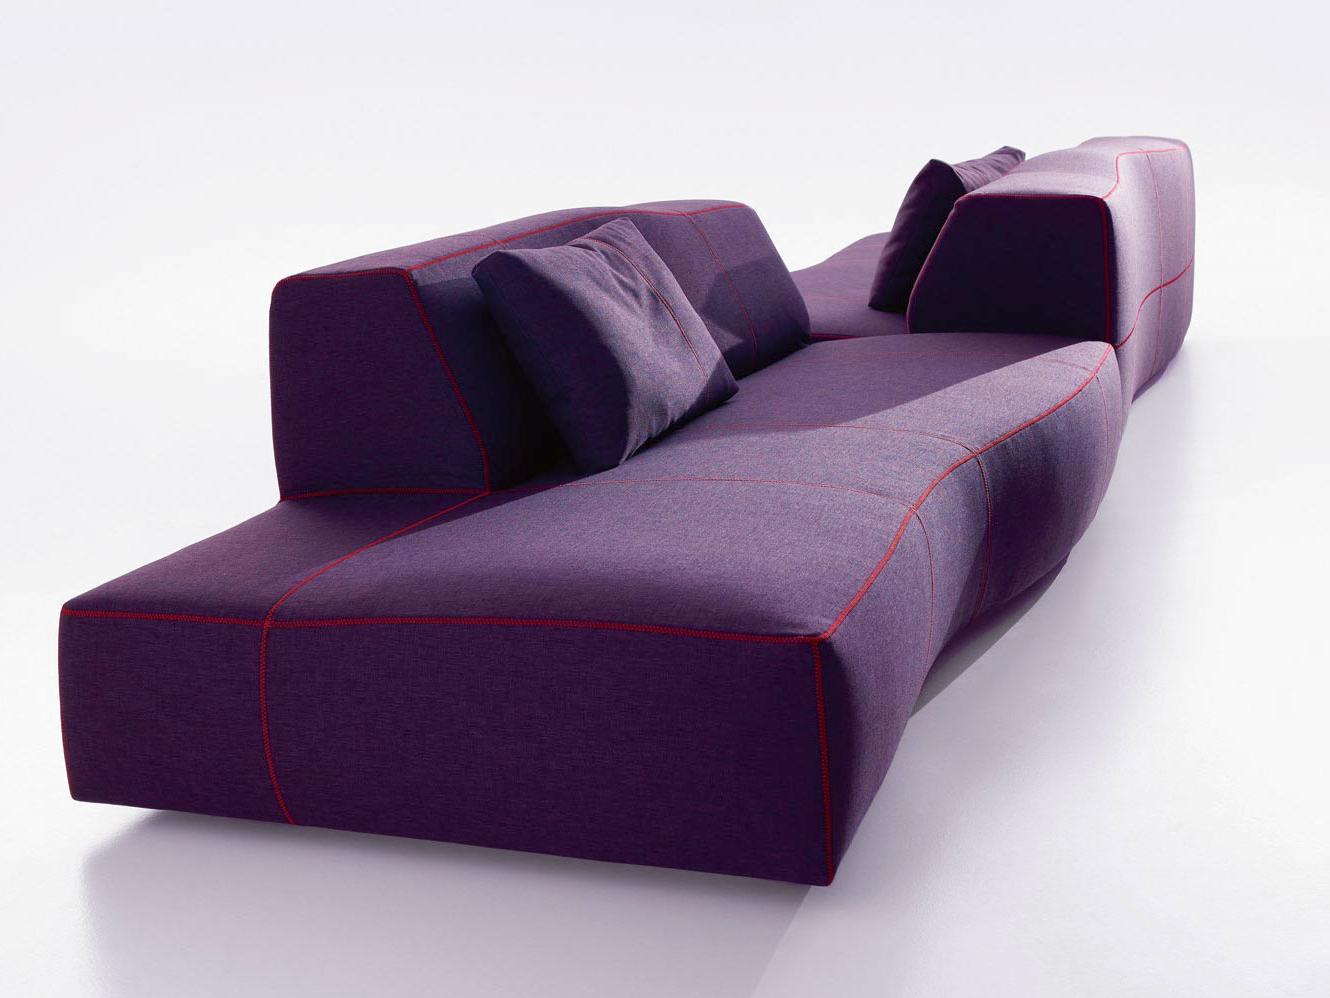 Bend-Sofa by Patricia Urquiola